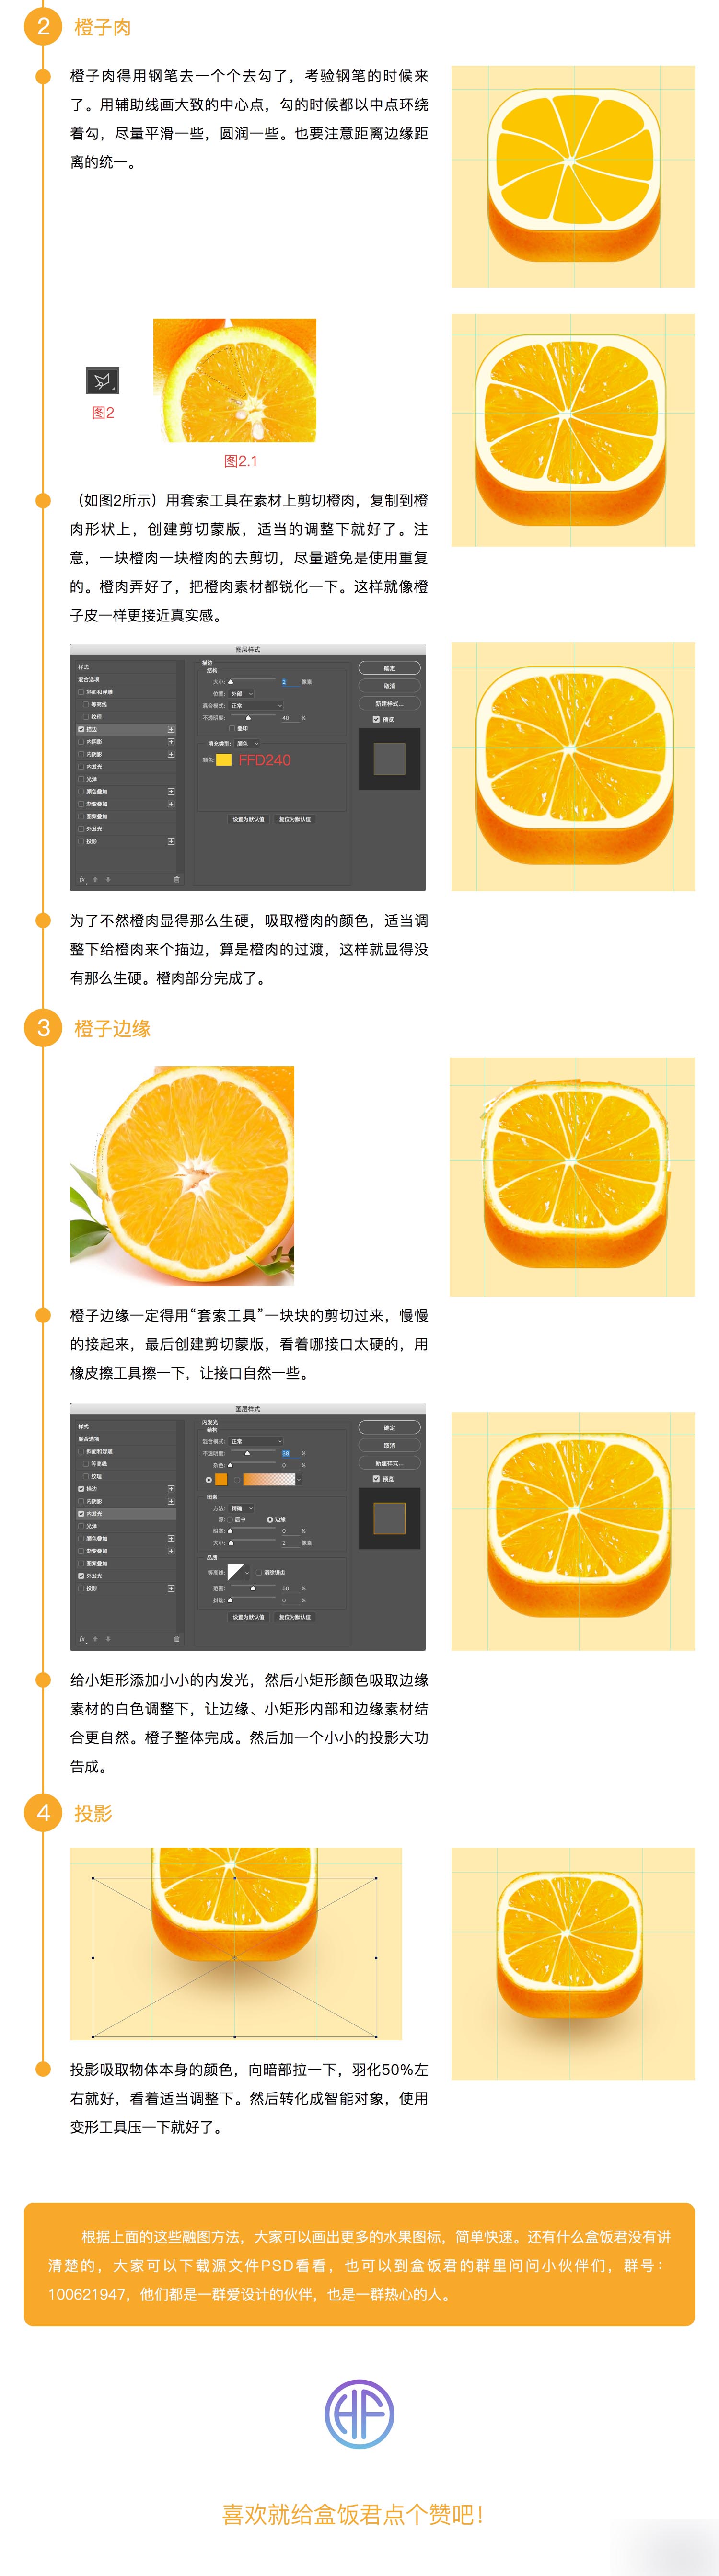 PS鼠繪非常有創意逼真的橙子APP圖標